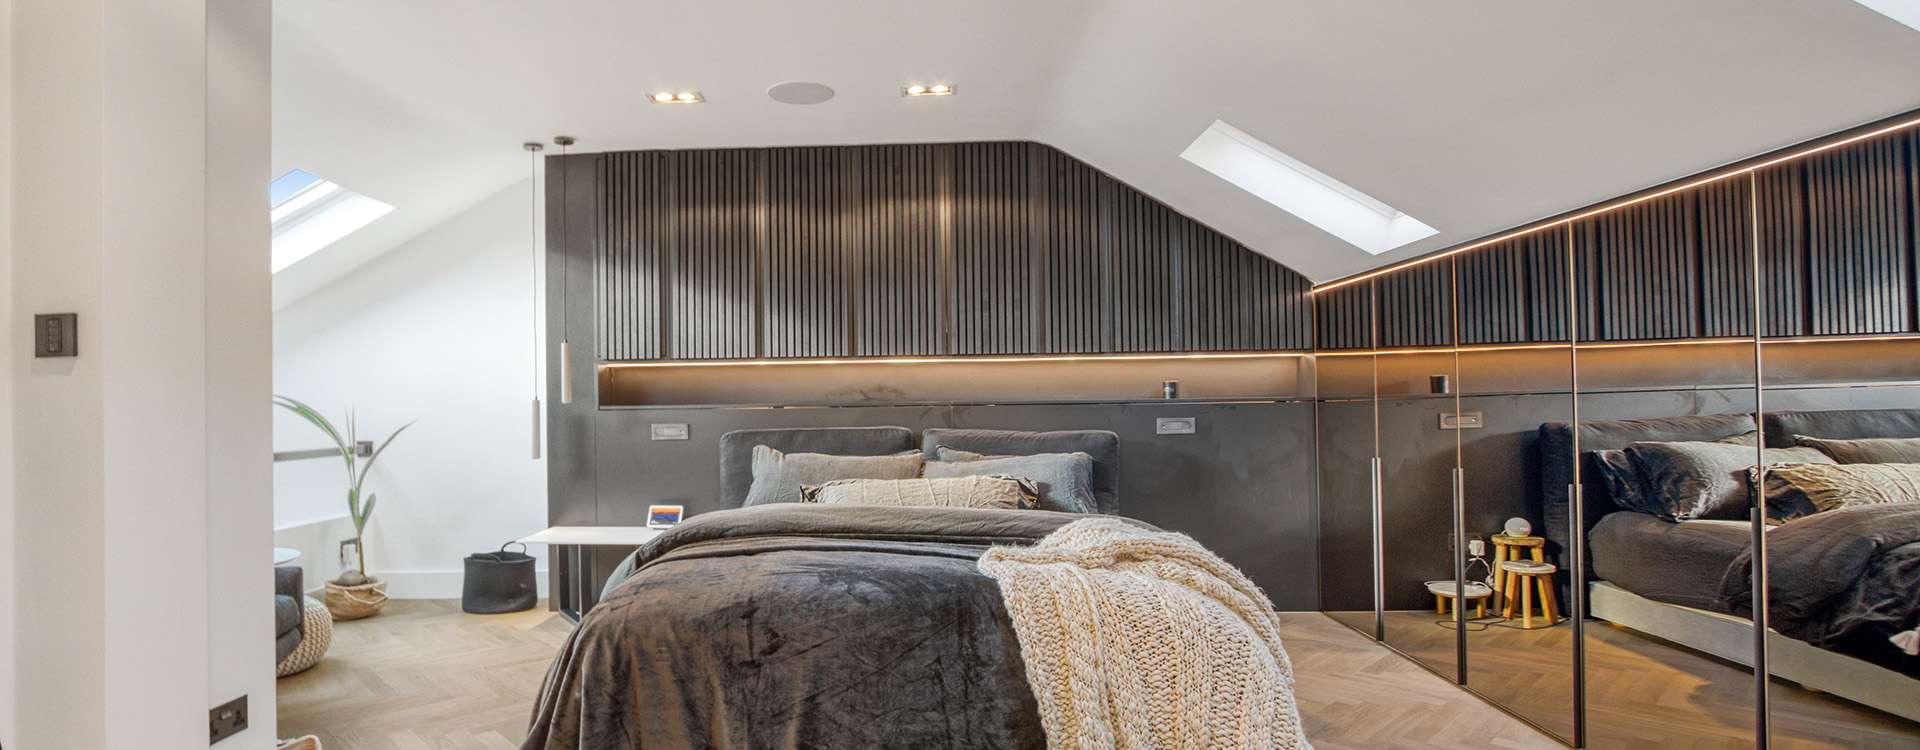 high end bedroom Loft conversion